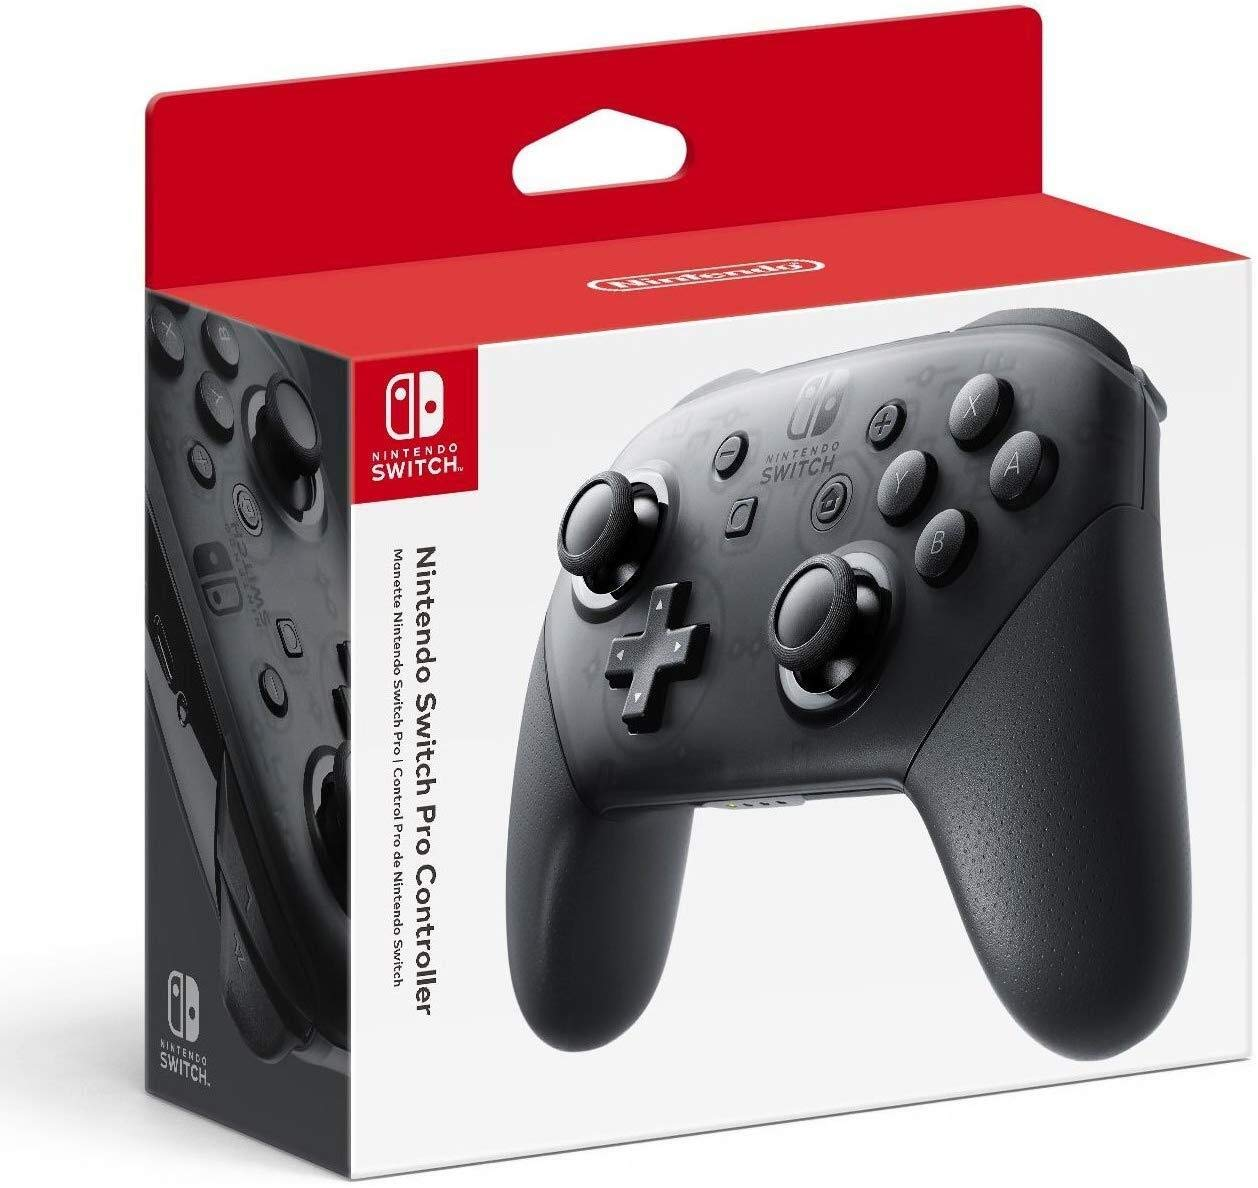 Amazon.com: Nintendo Switch Pro Controller: Video Games $59.00